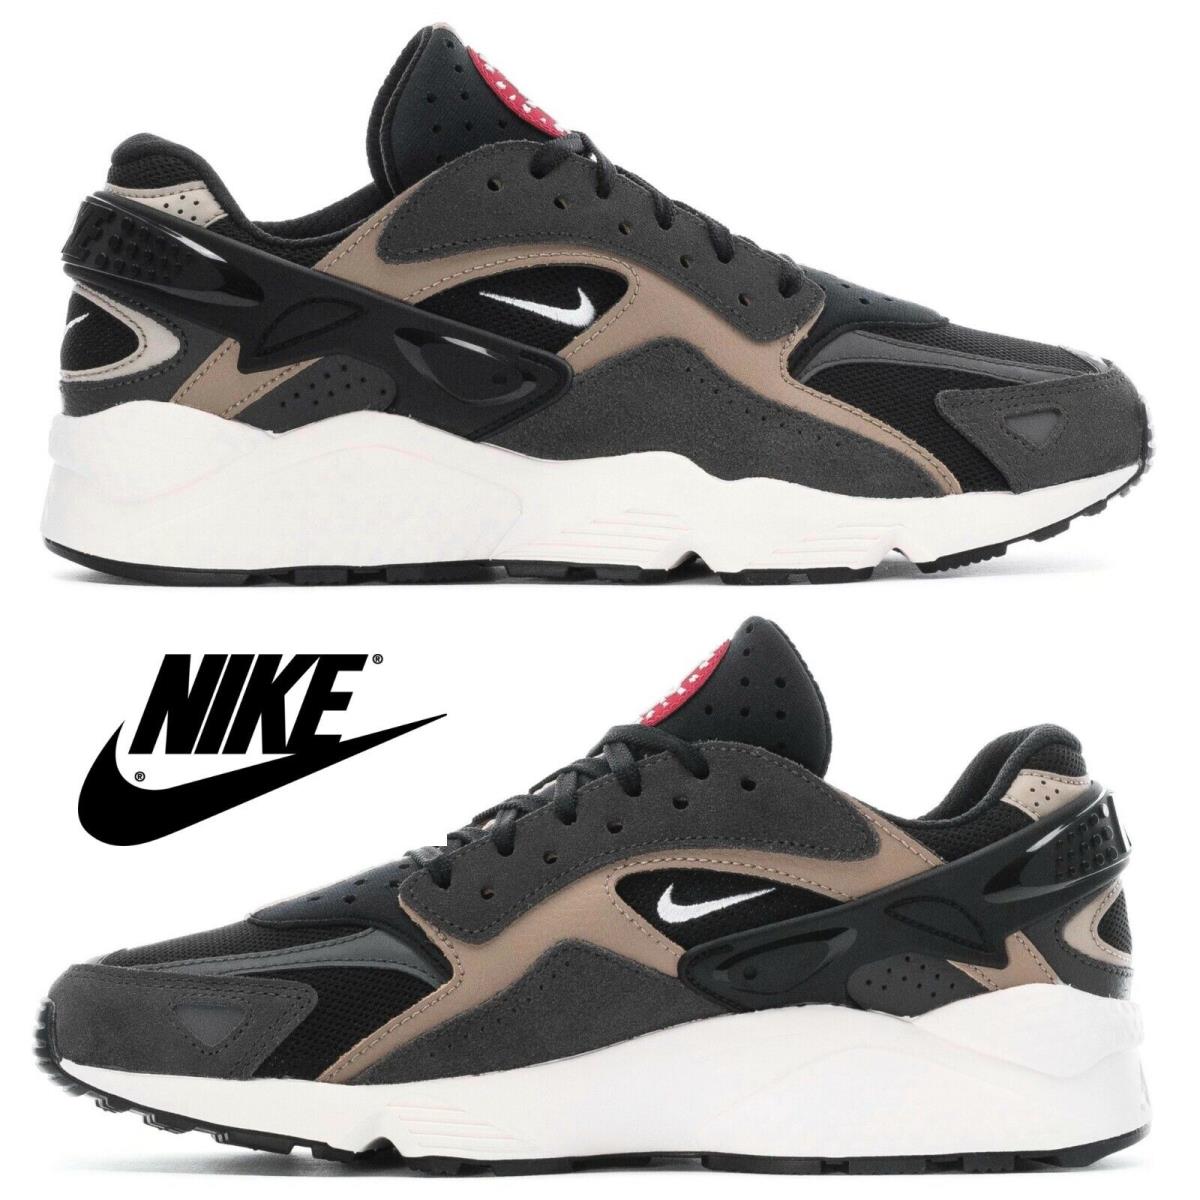 Nike Air Huarache Runner Men`s Casual Shoes Running Athletic Comfort Sport Black - Black, Manufacturer: Black/White/Khaki/Gym Red